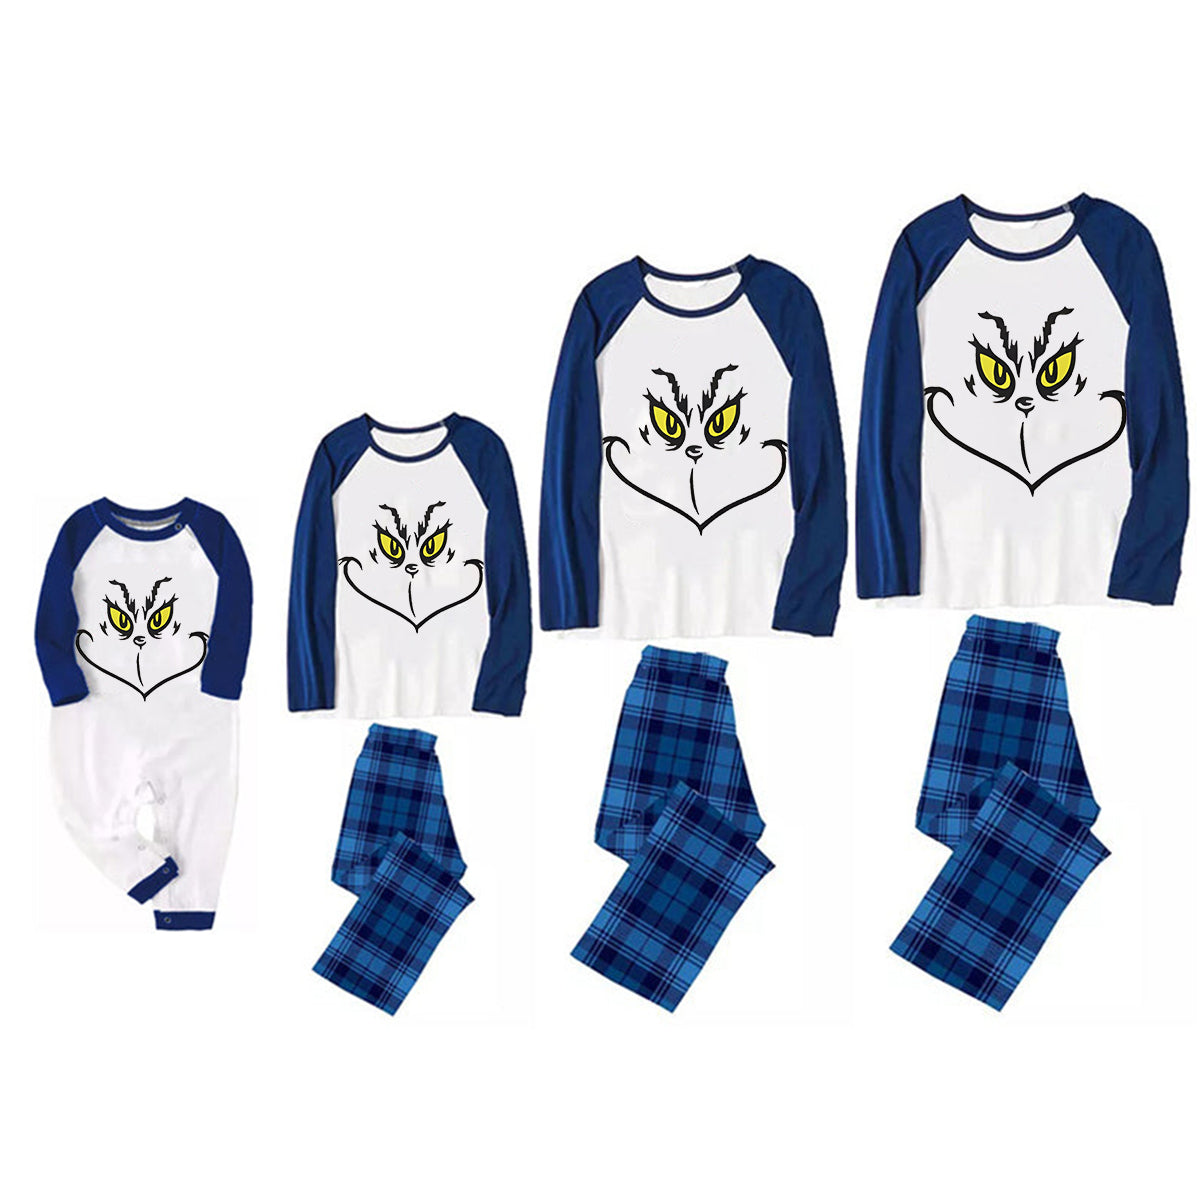 Christmas Cartoon Face Print Blue Contrast Top and Black and Blue Plaid Pants Family Matching Pajamas Sets With Dog Bandana